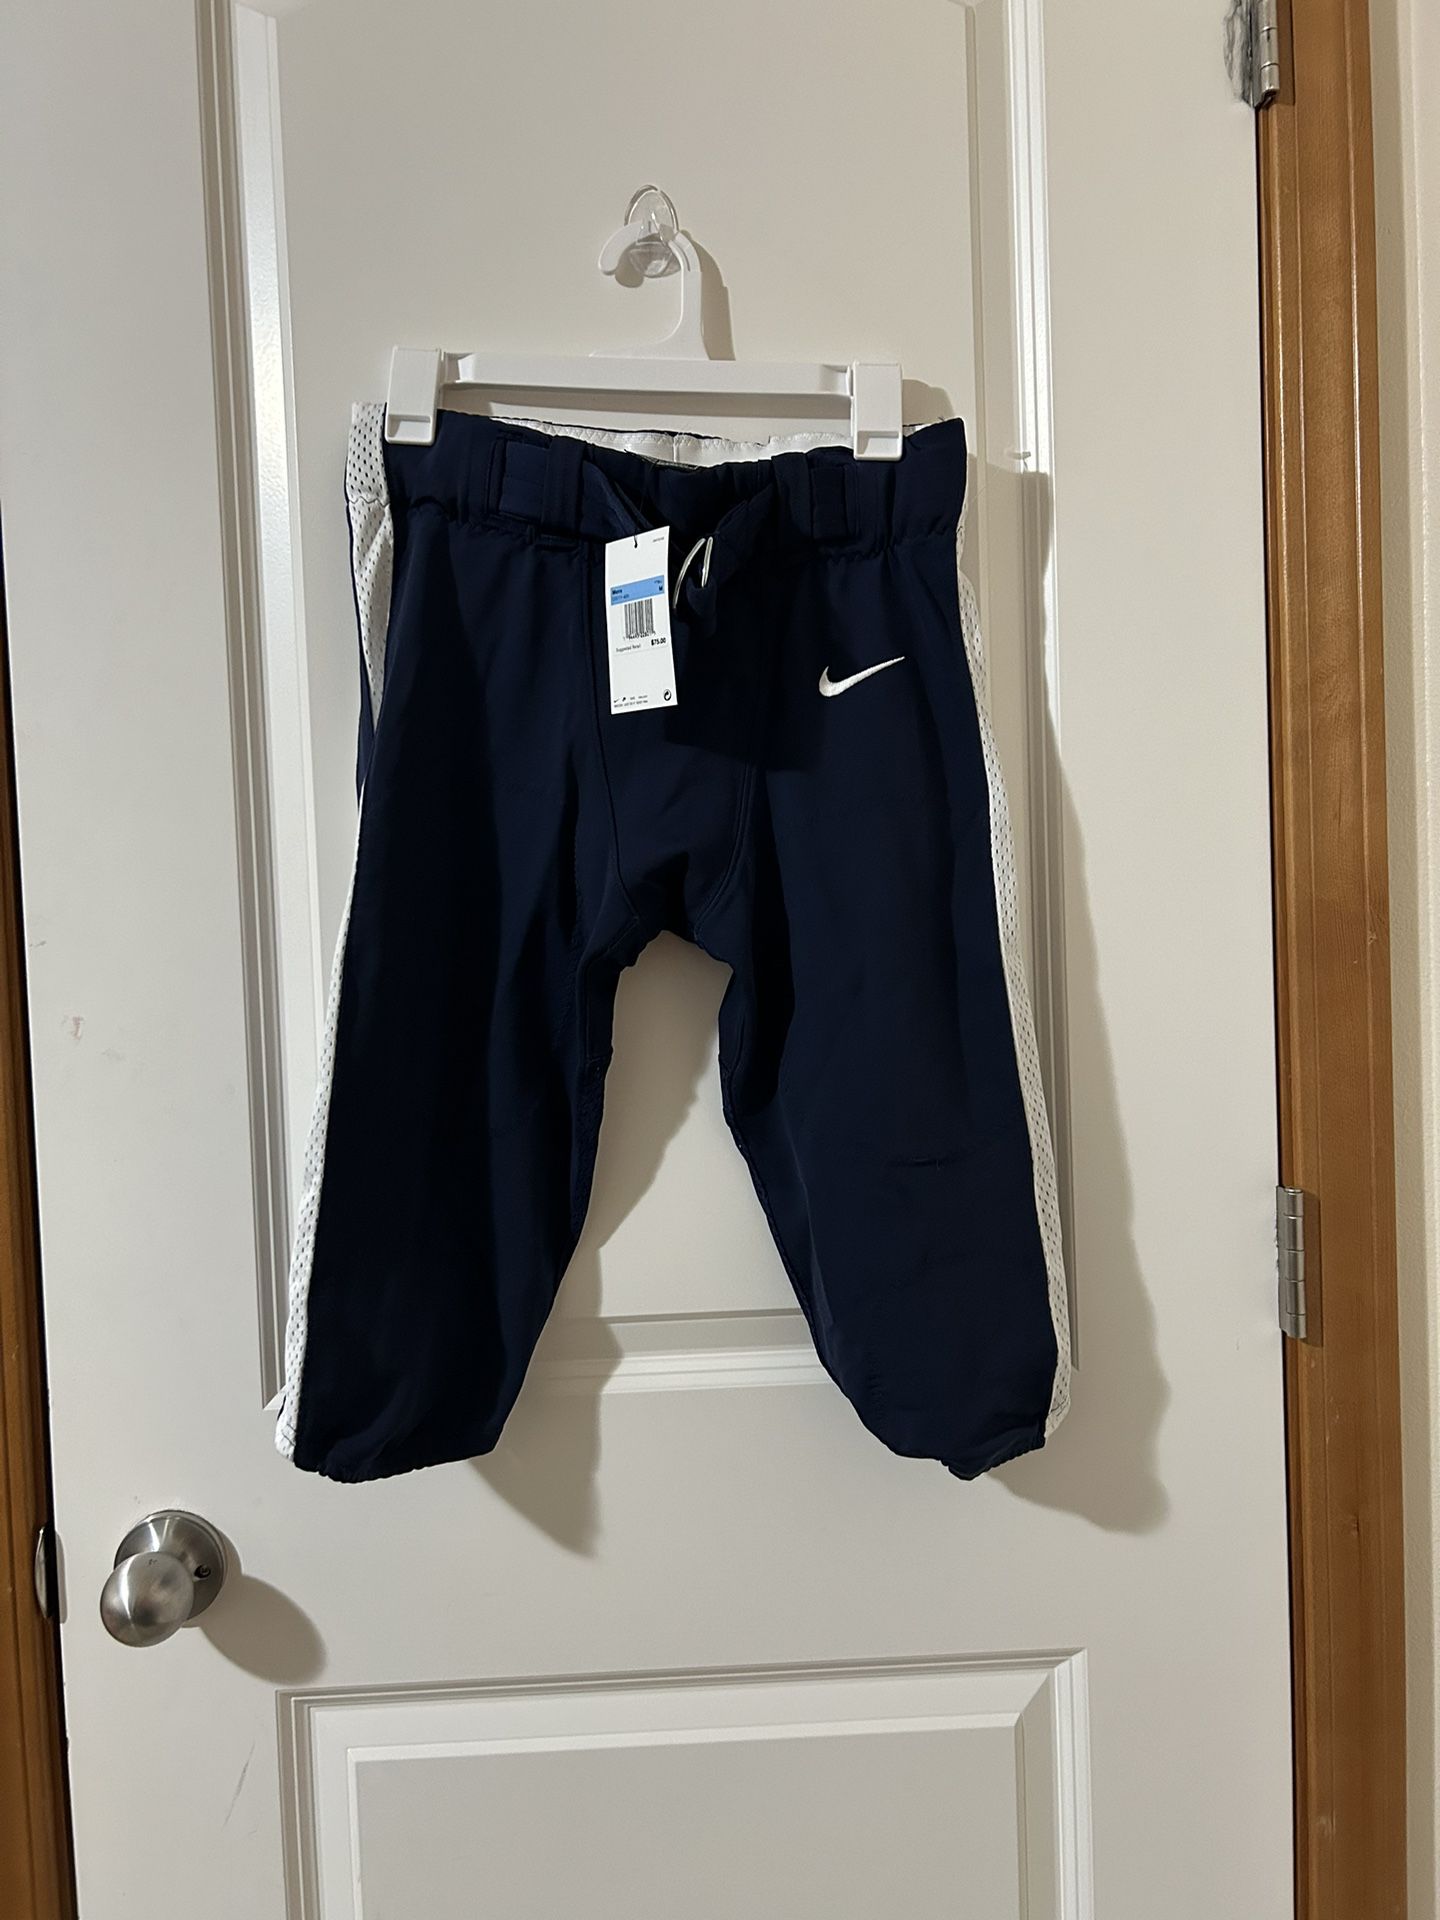 Nike football pants, New, Medium, navy blue, retails at $75